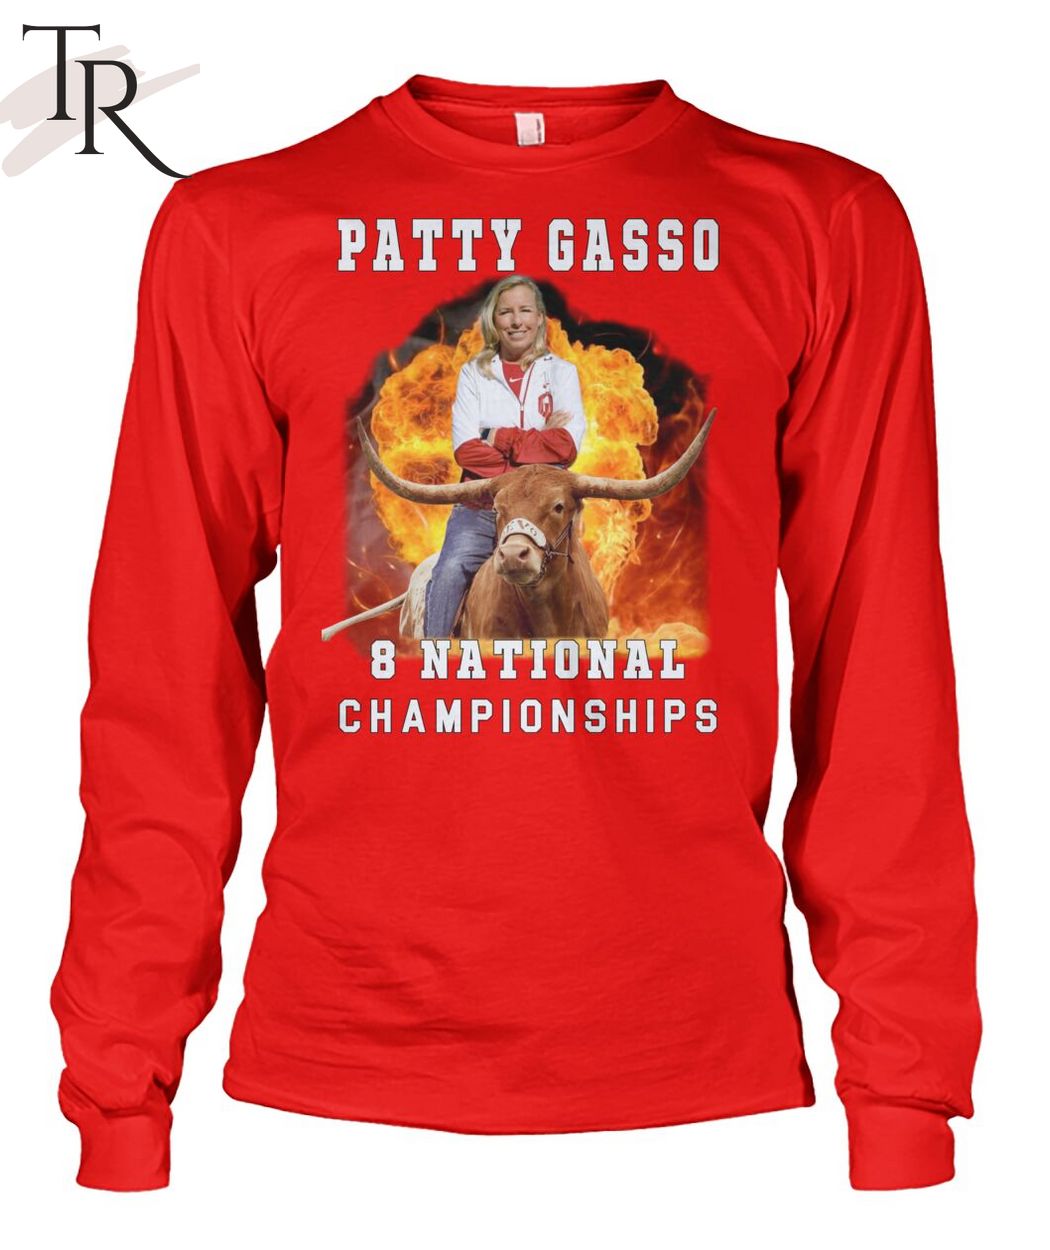 Patty Gasso 8 National Championship T-Shirt